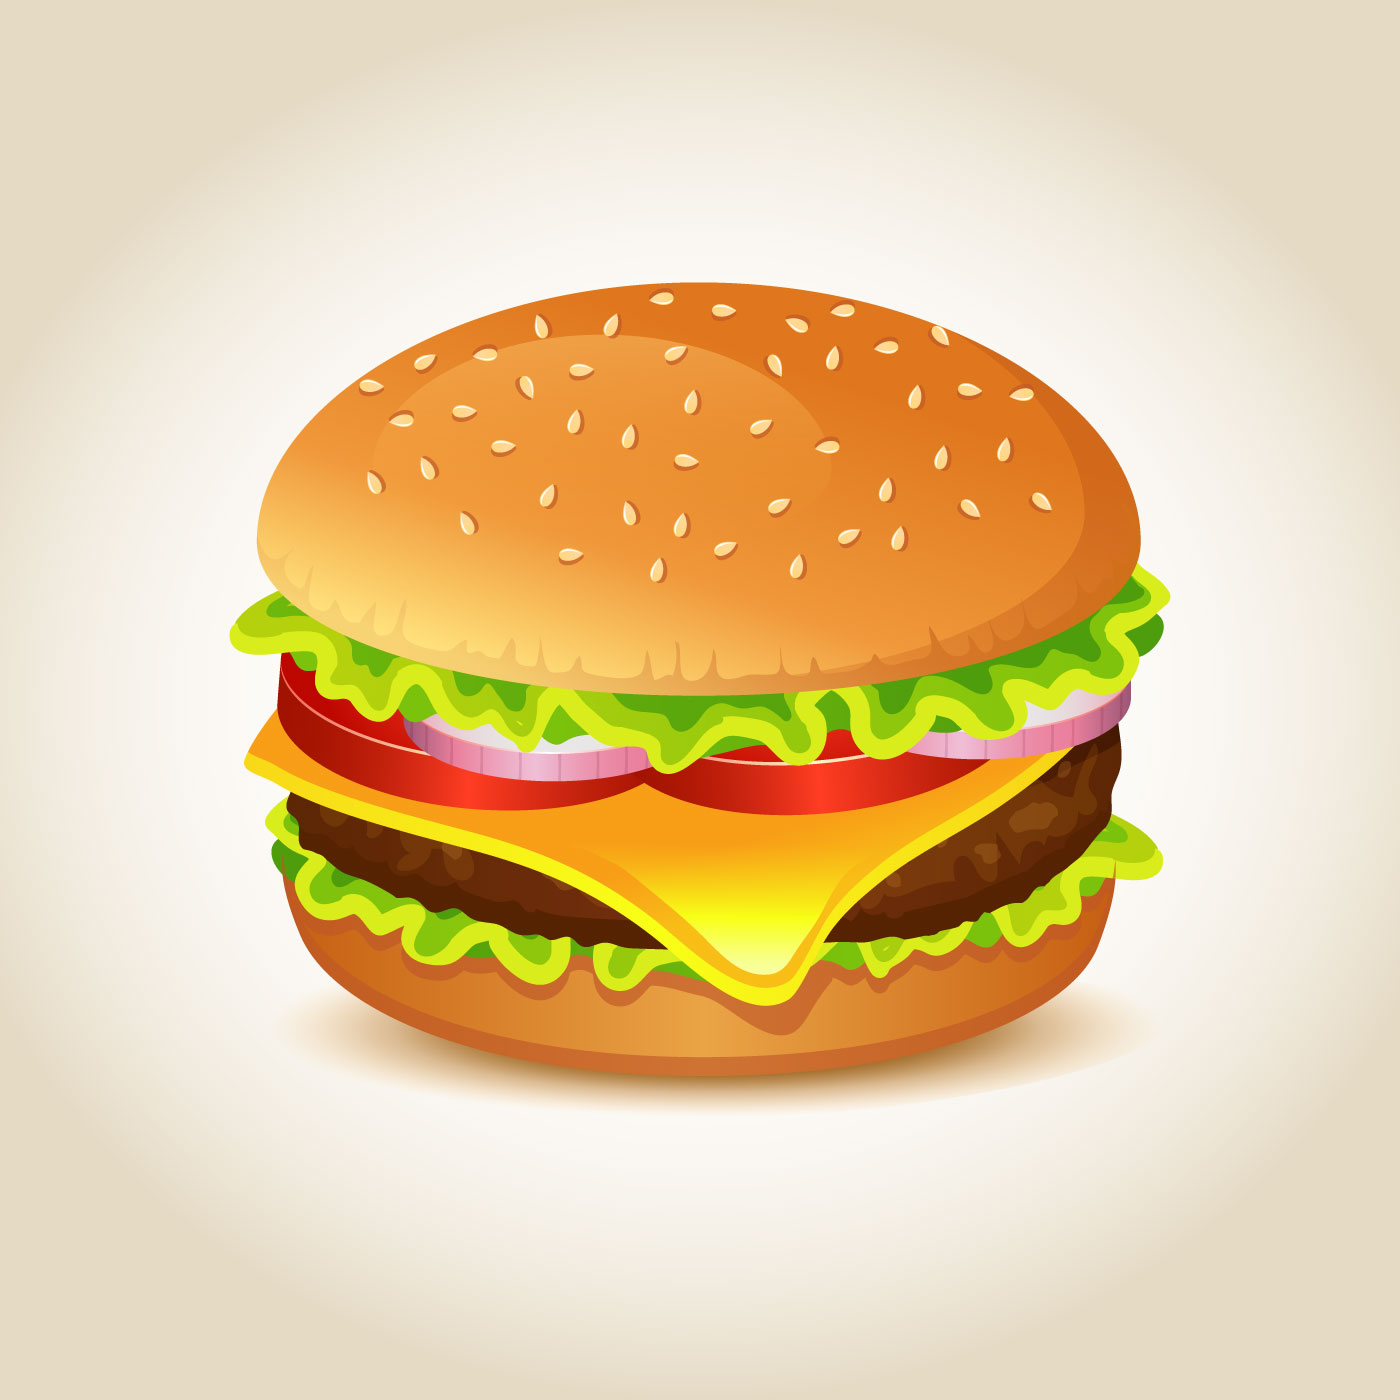 Cheeseburger free vector.